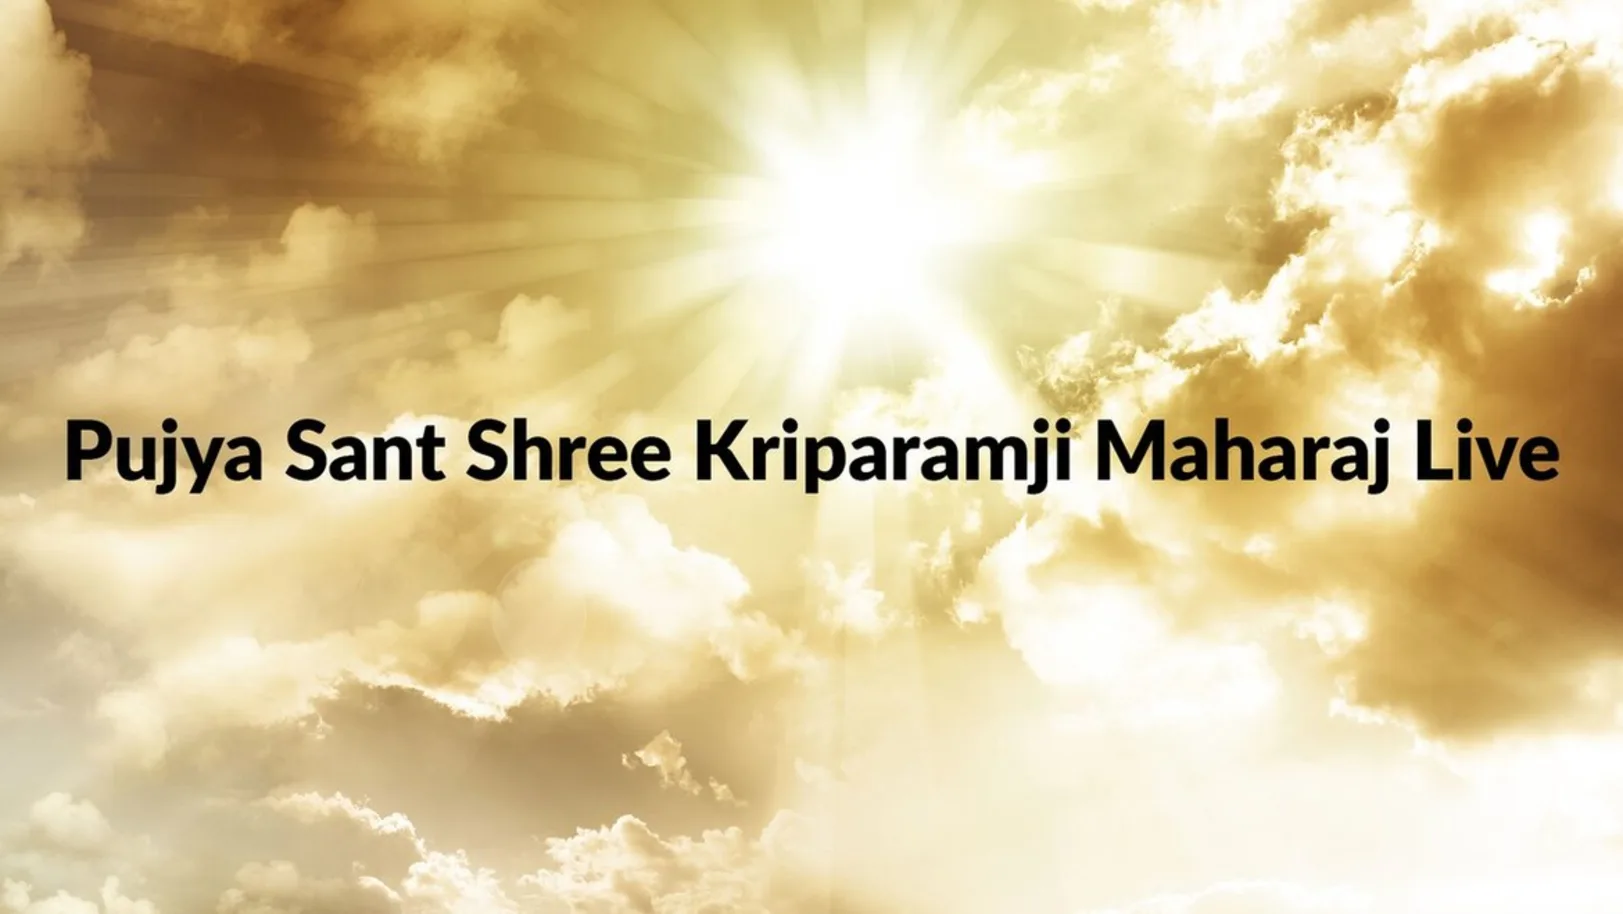 Pujya Sant Shree Kriparamji Maharaj Live Streaming Now On Dharm Sandesh